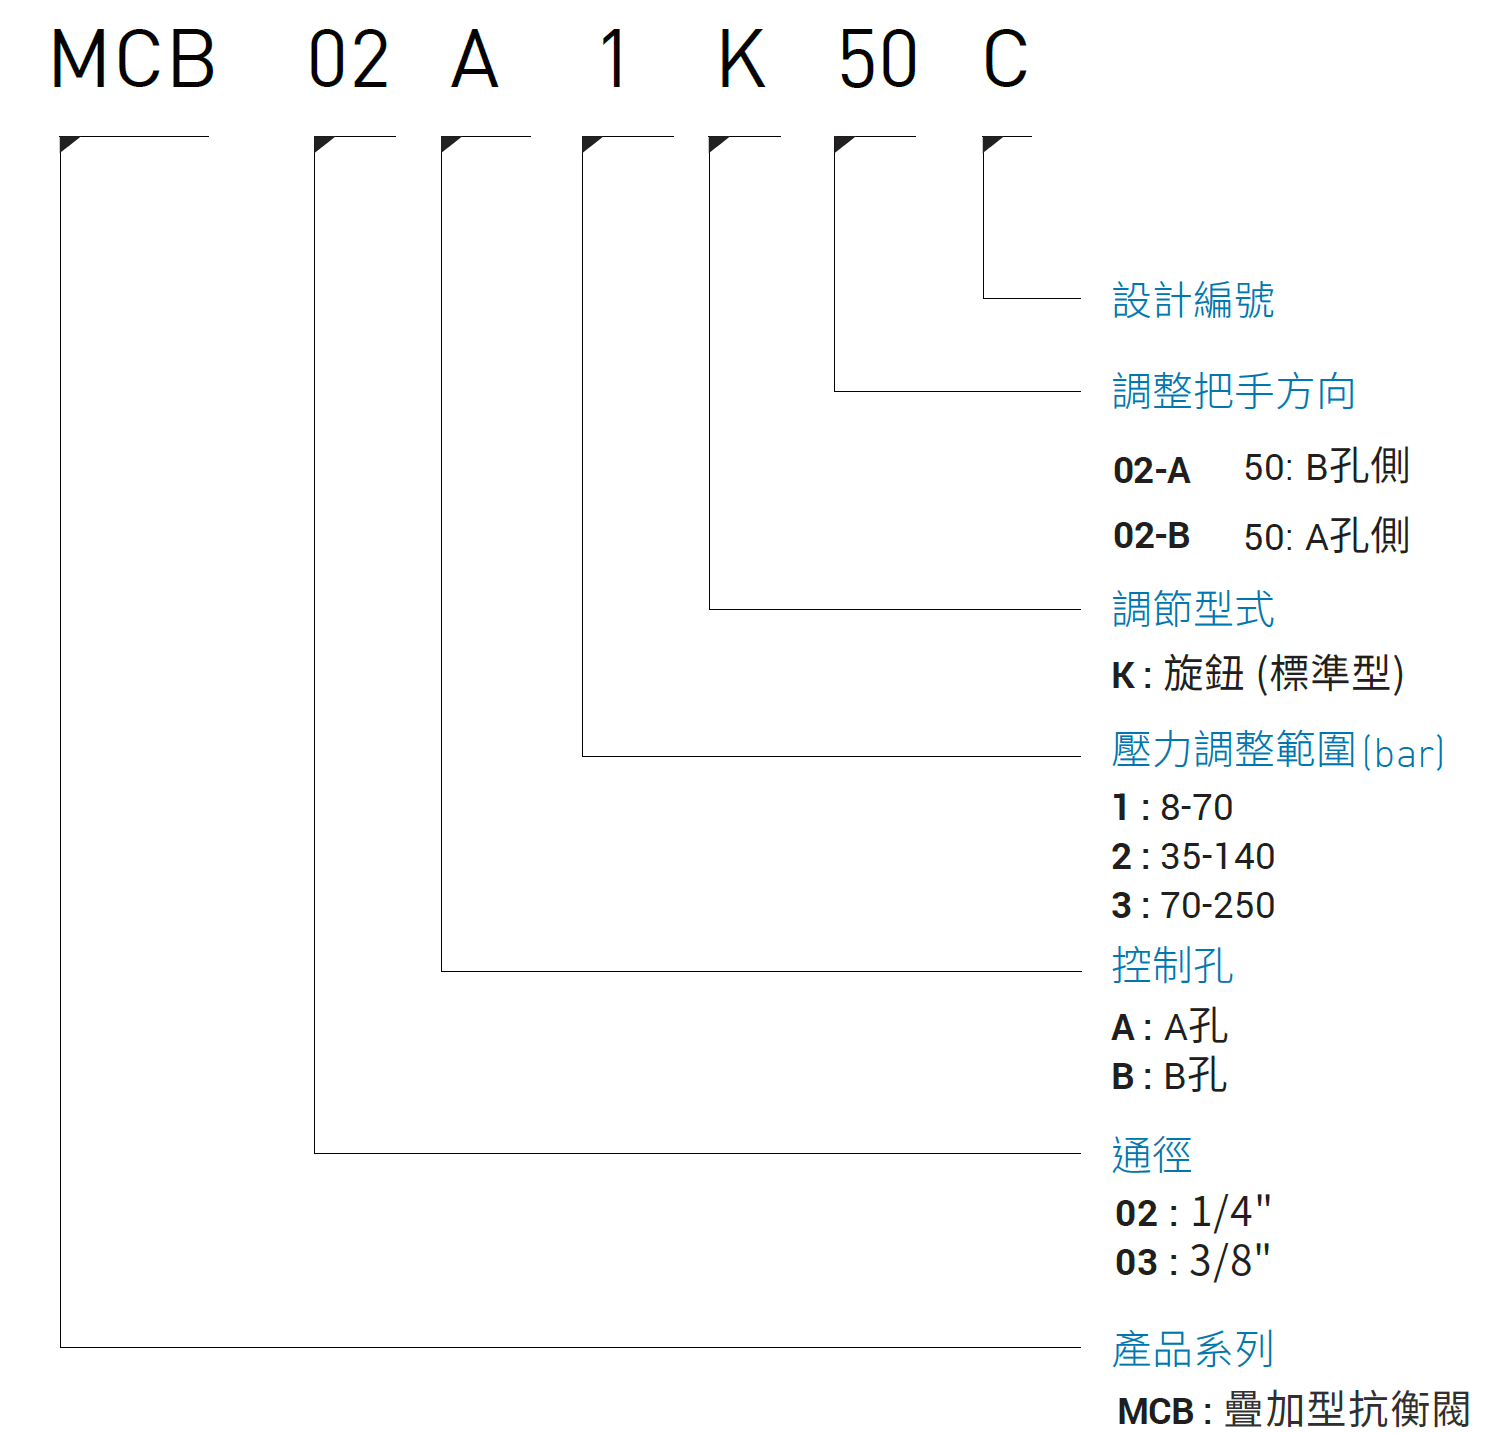 CML疊加型抗衡閥MCB (積層閥) 形式編碼